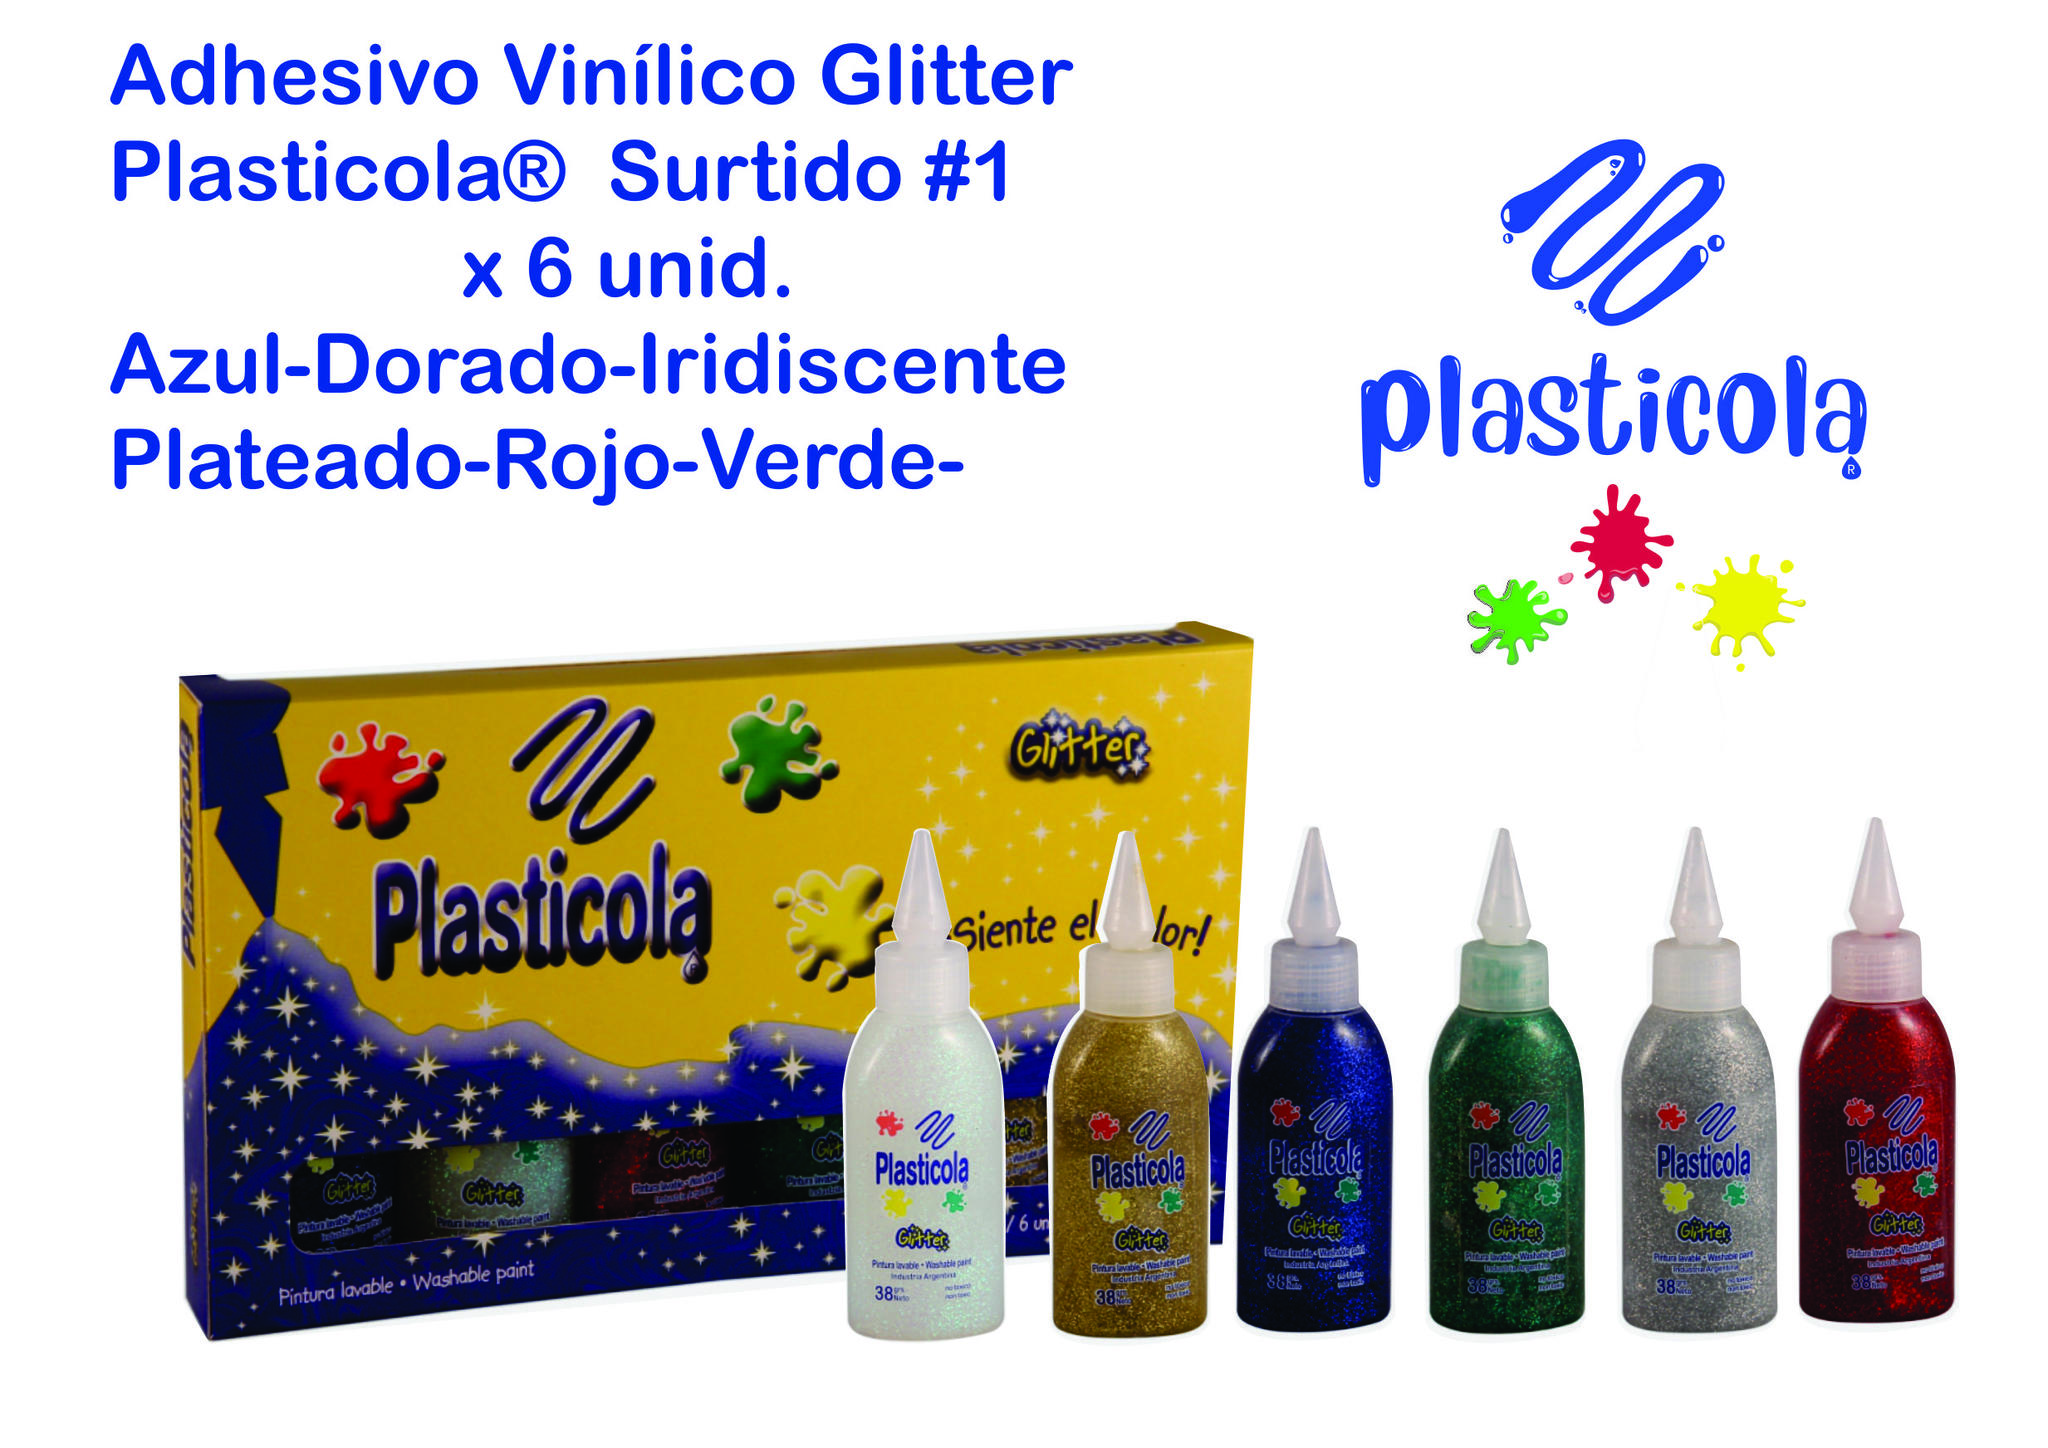 ADHESIVO C/GLITTER PLASTICOLA 38 GRS X 6 UN Nº 1